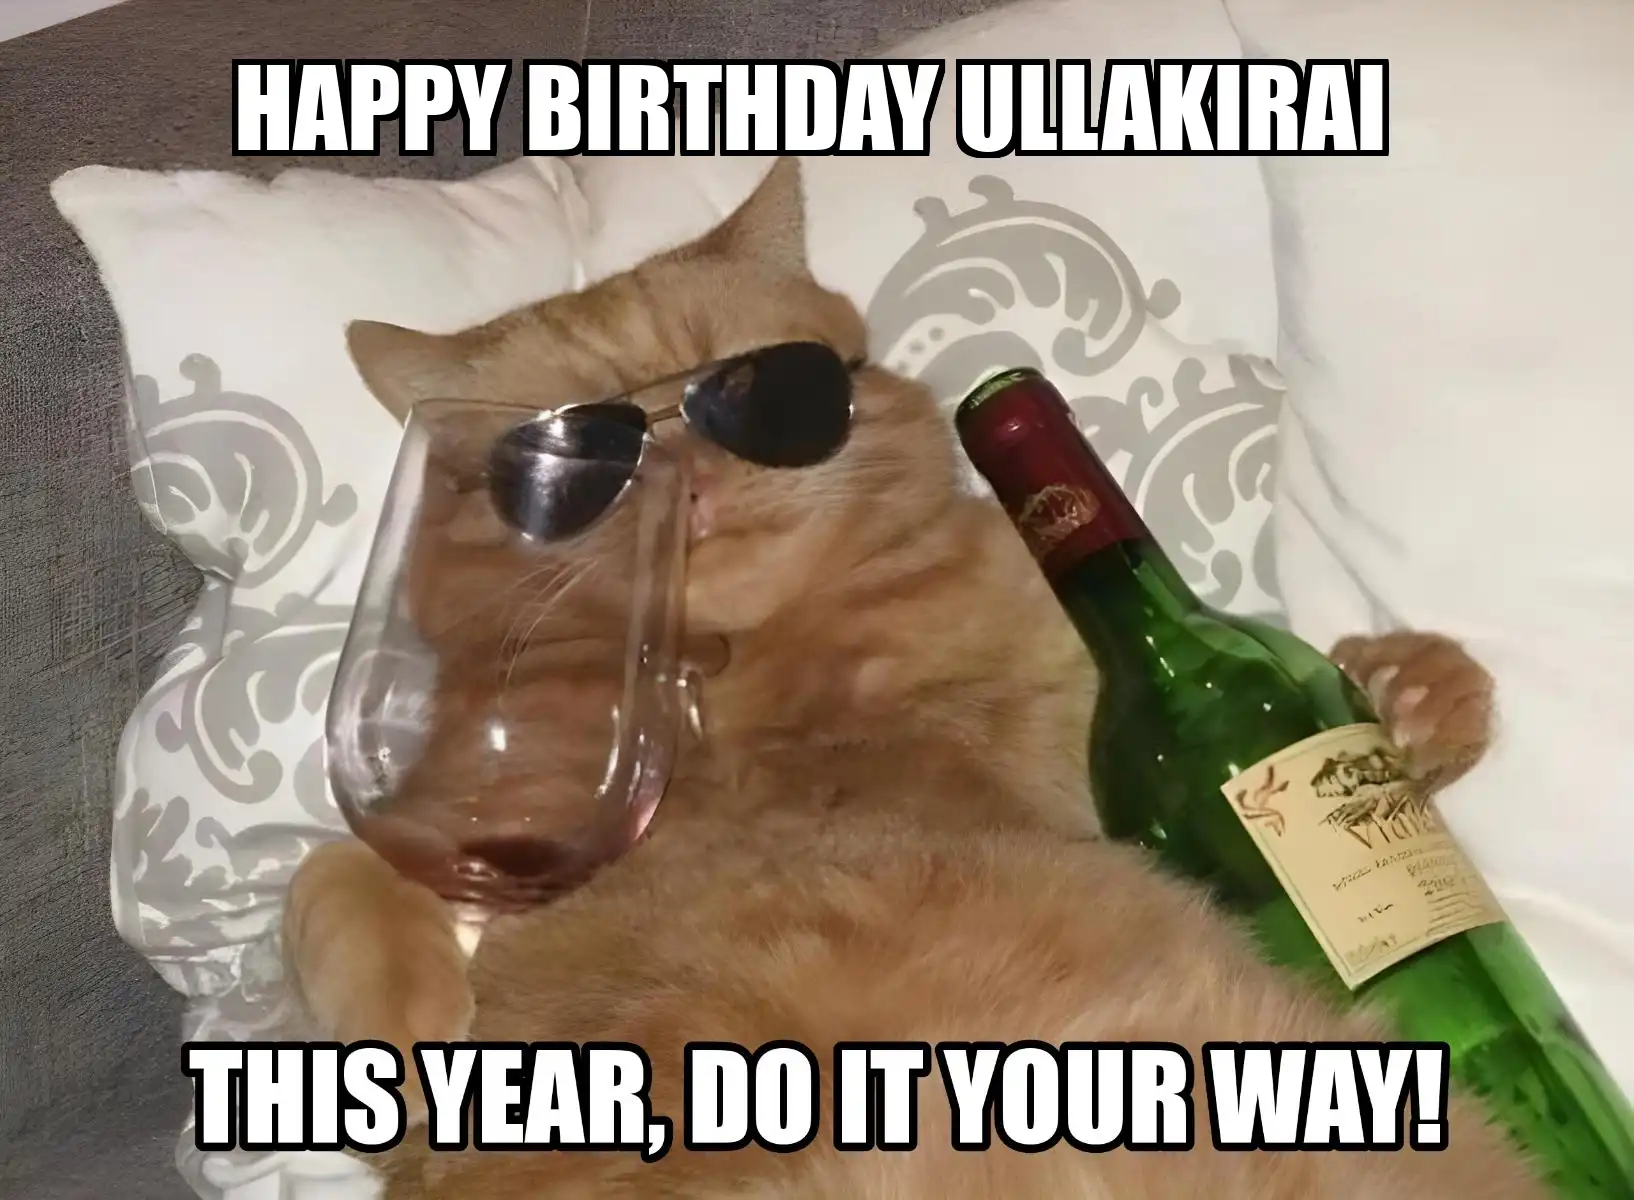 Happy Birthday Ullakirai This Year Do It Your Way Meme